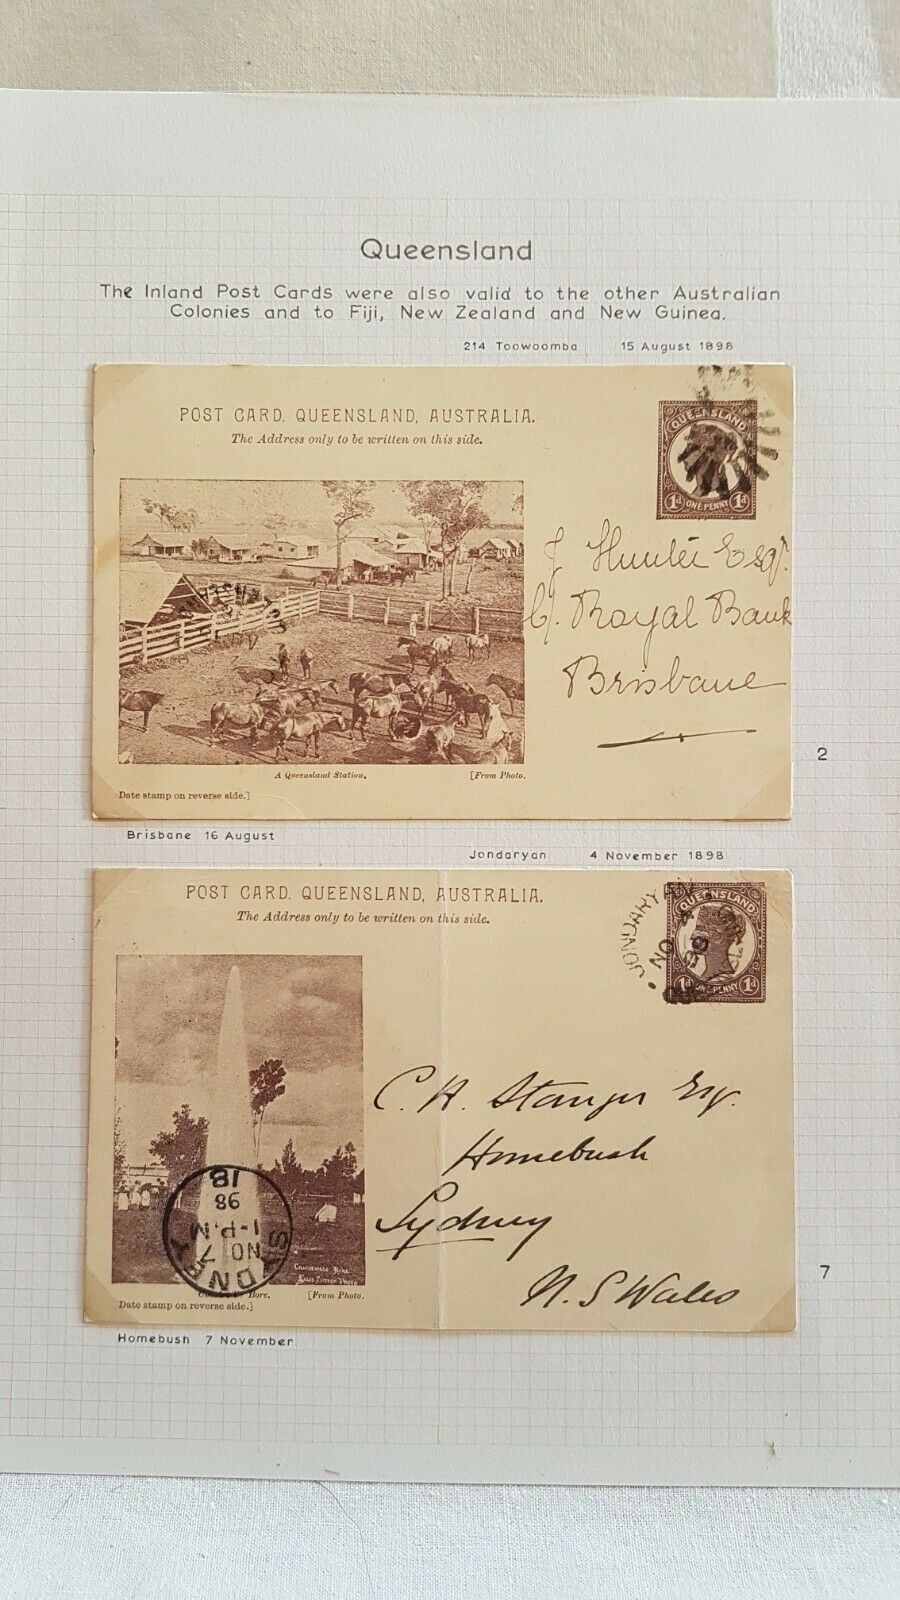 Queensland Postcard, 1d A Queensland station,1d Artesian bore. Used